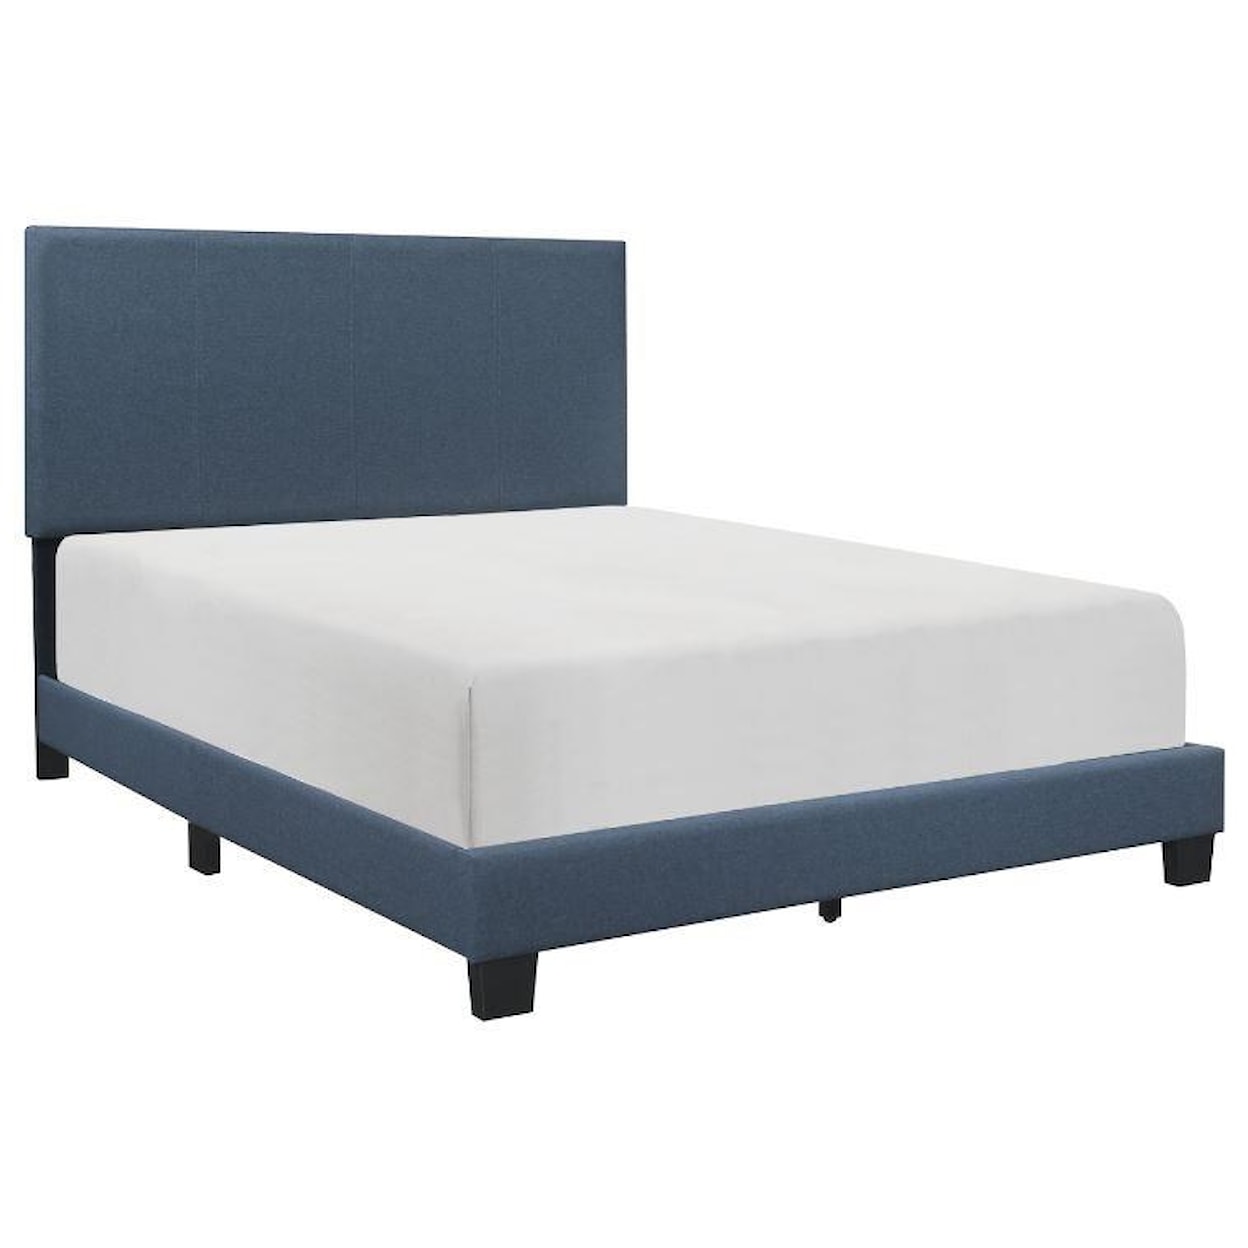 Homelegance Furniture Nolens Full Bed in a Box